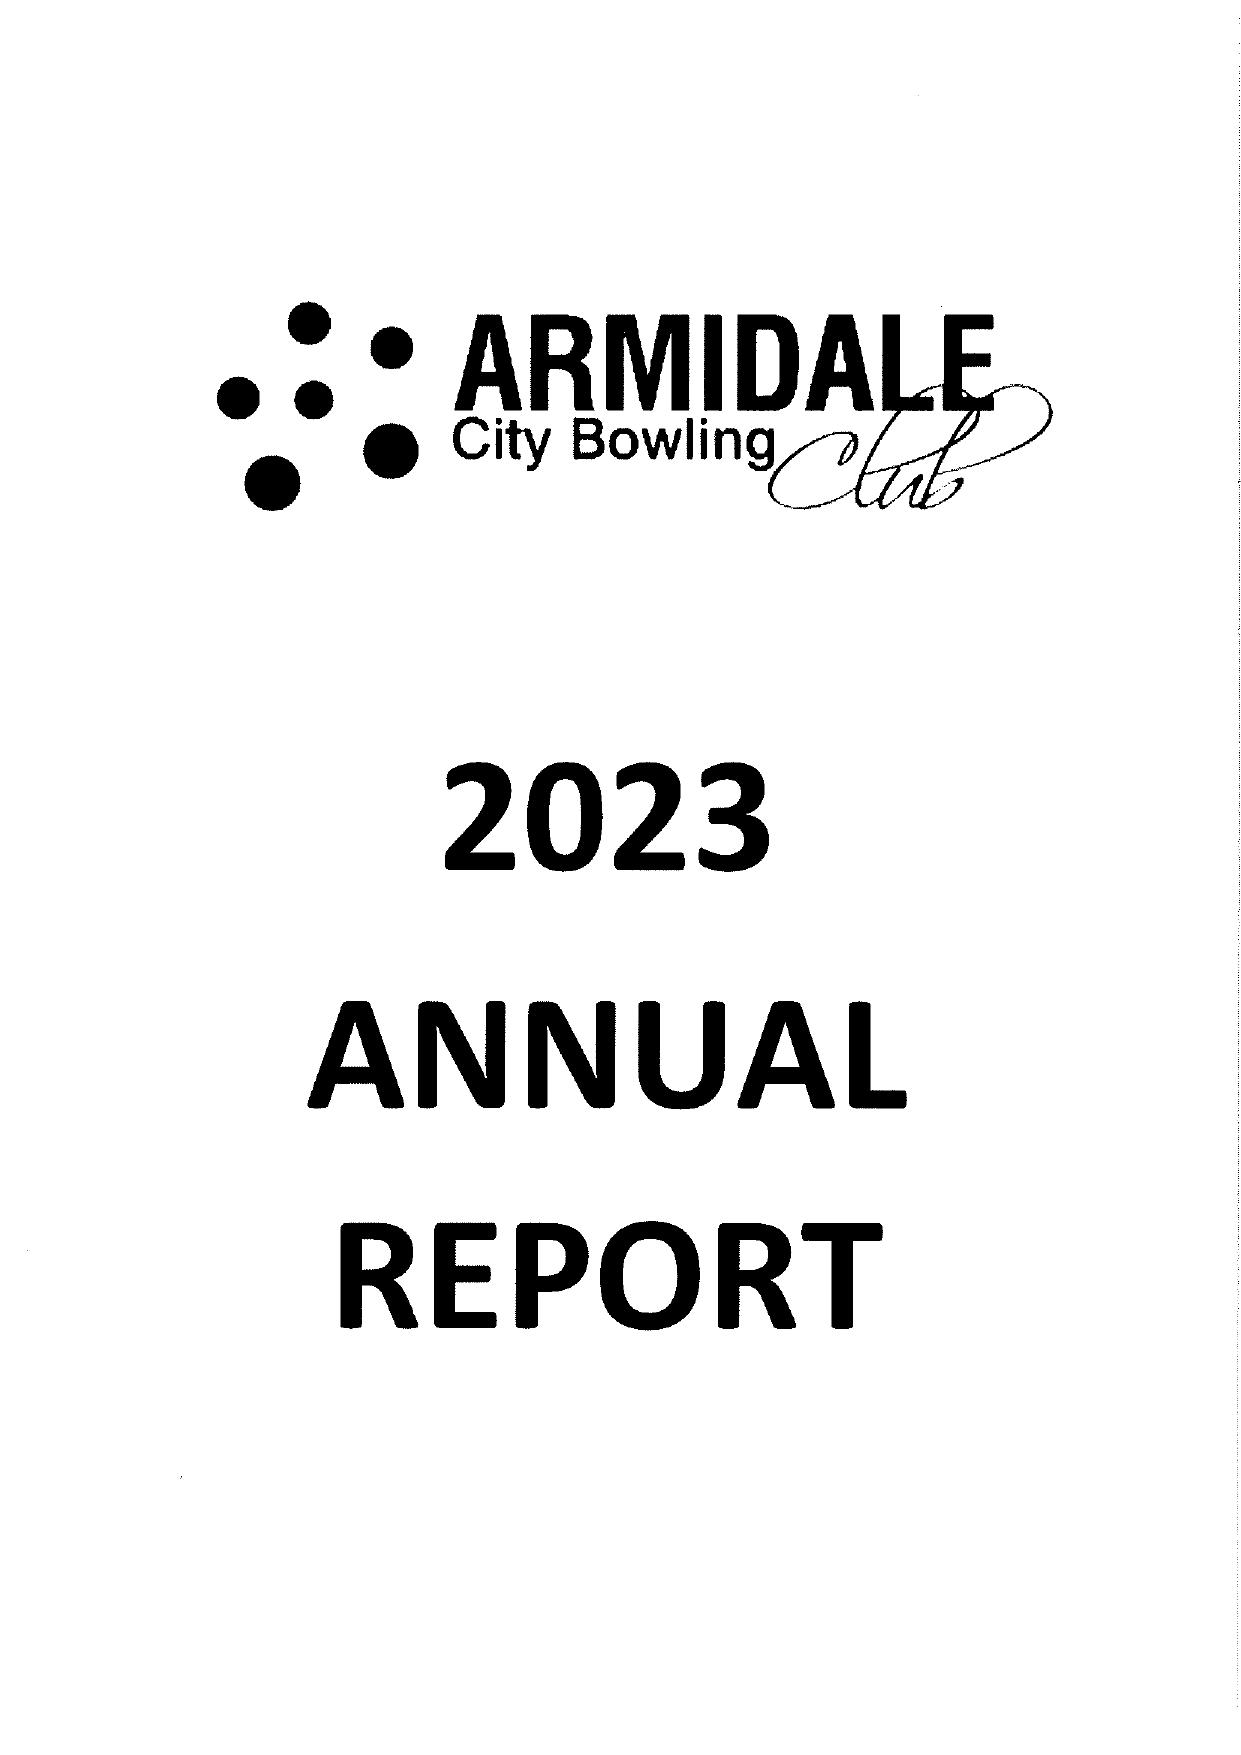 ARMIDALEBOWL 2023 Annual Report